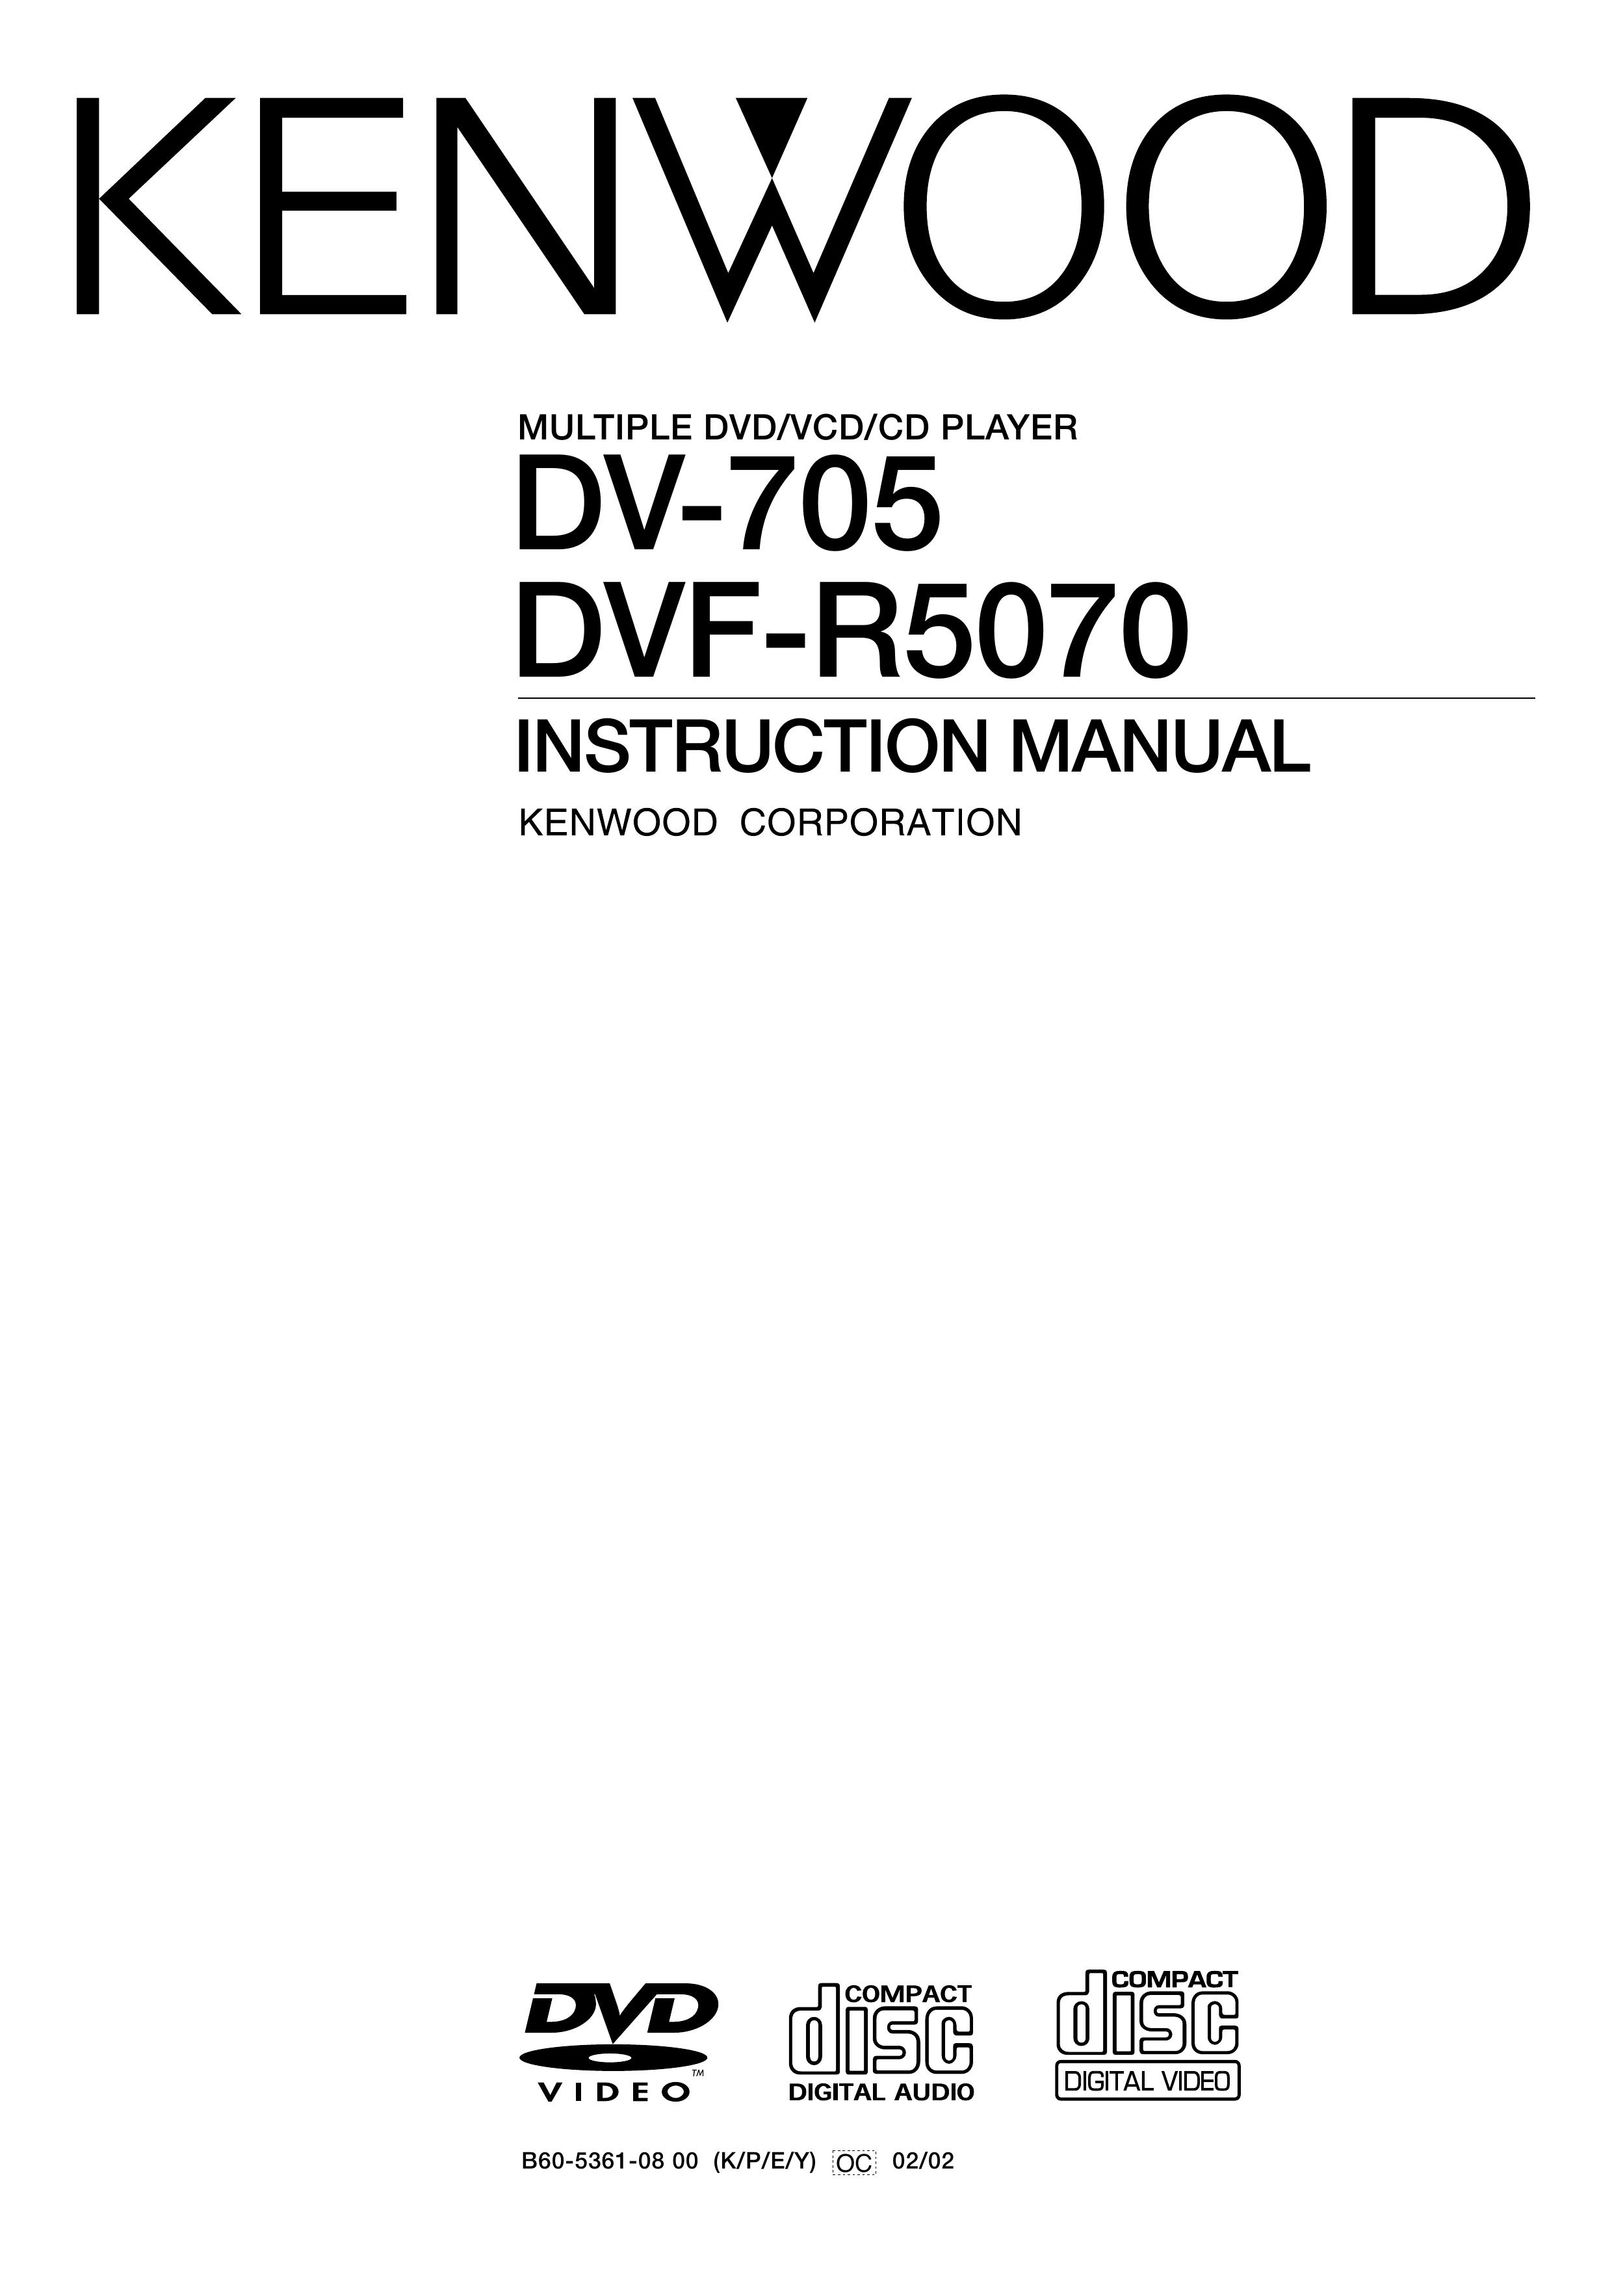 Kenwood DVF-R5070 Portable DVD Player User Manual